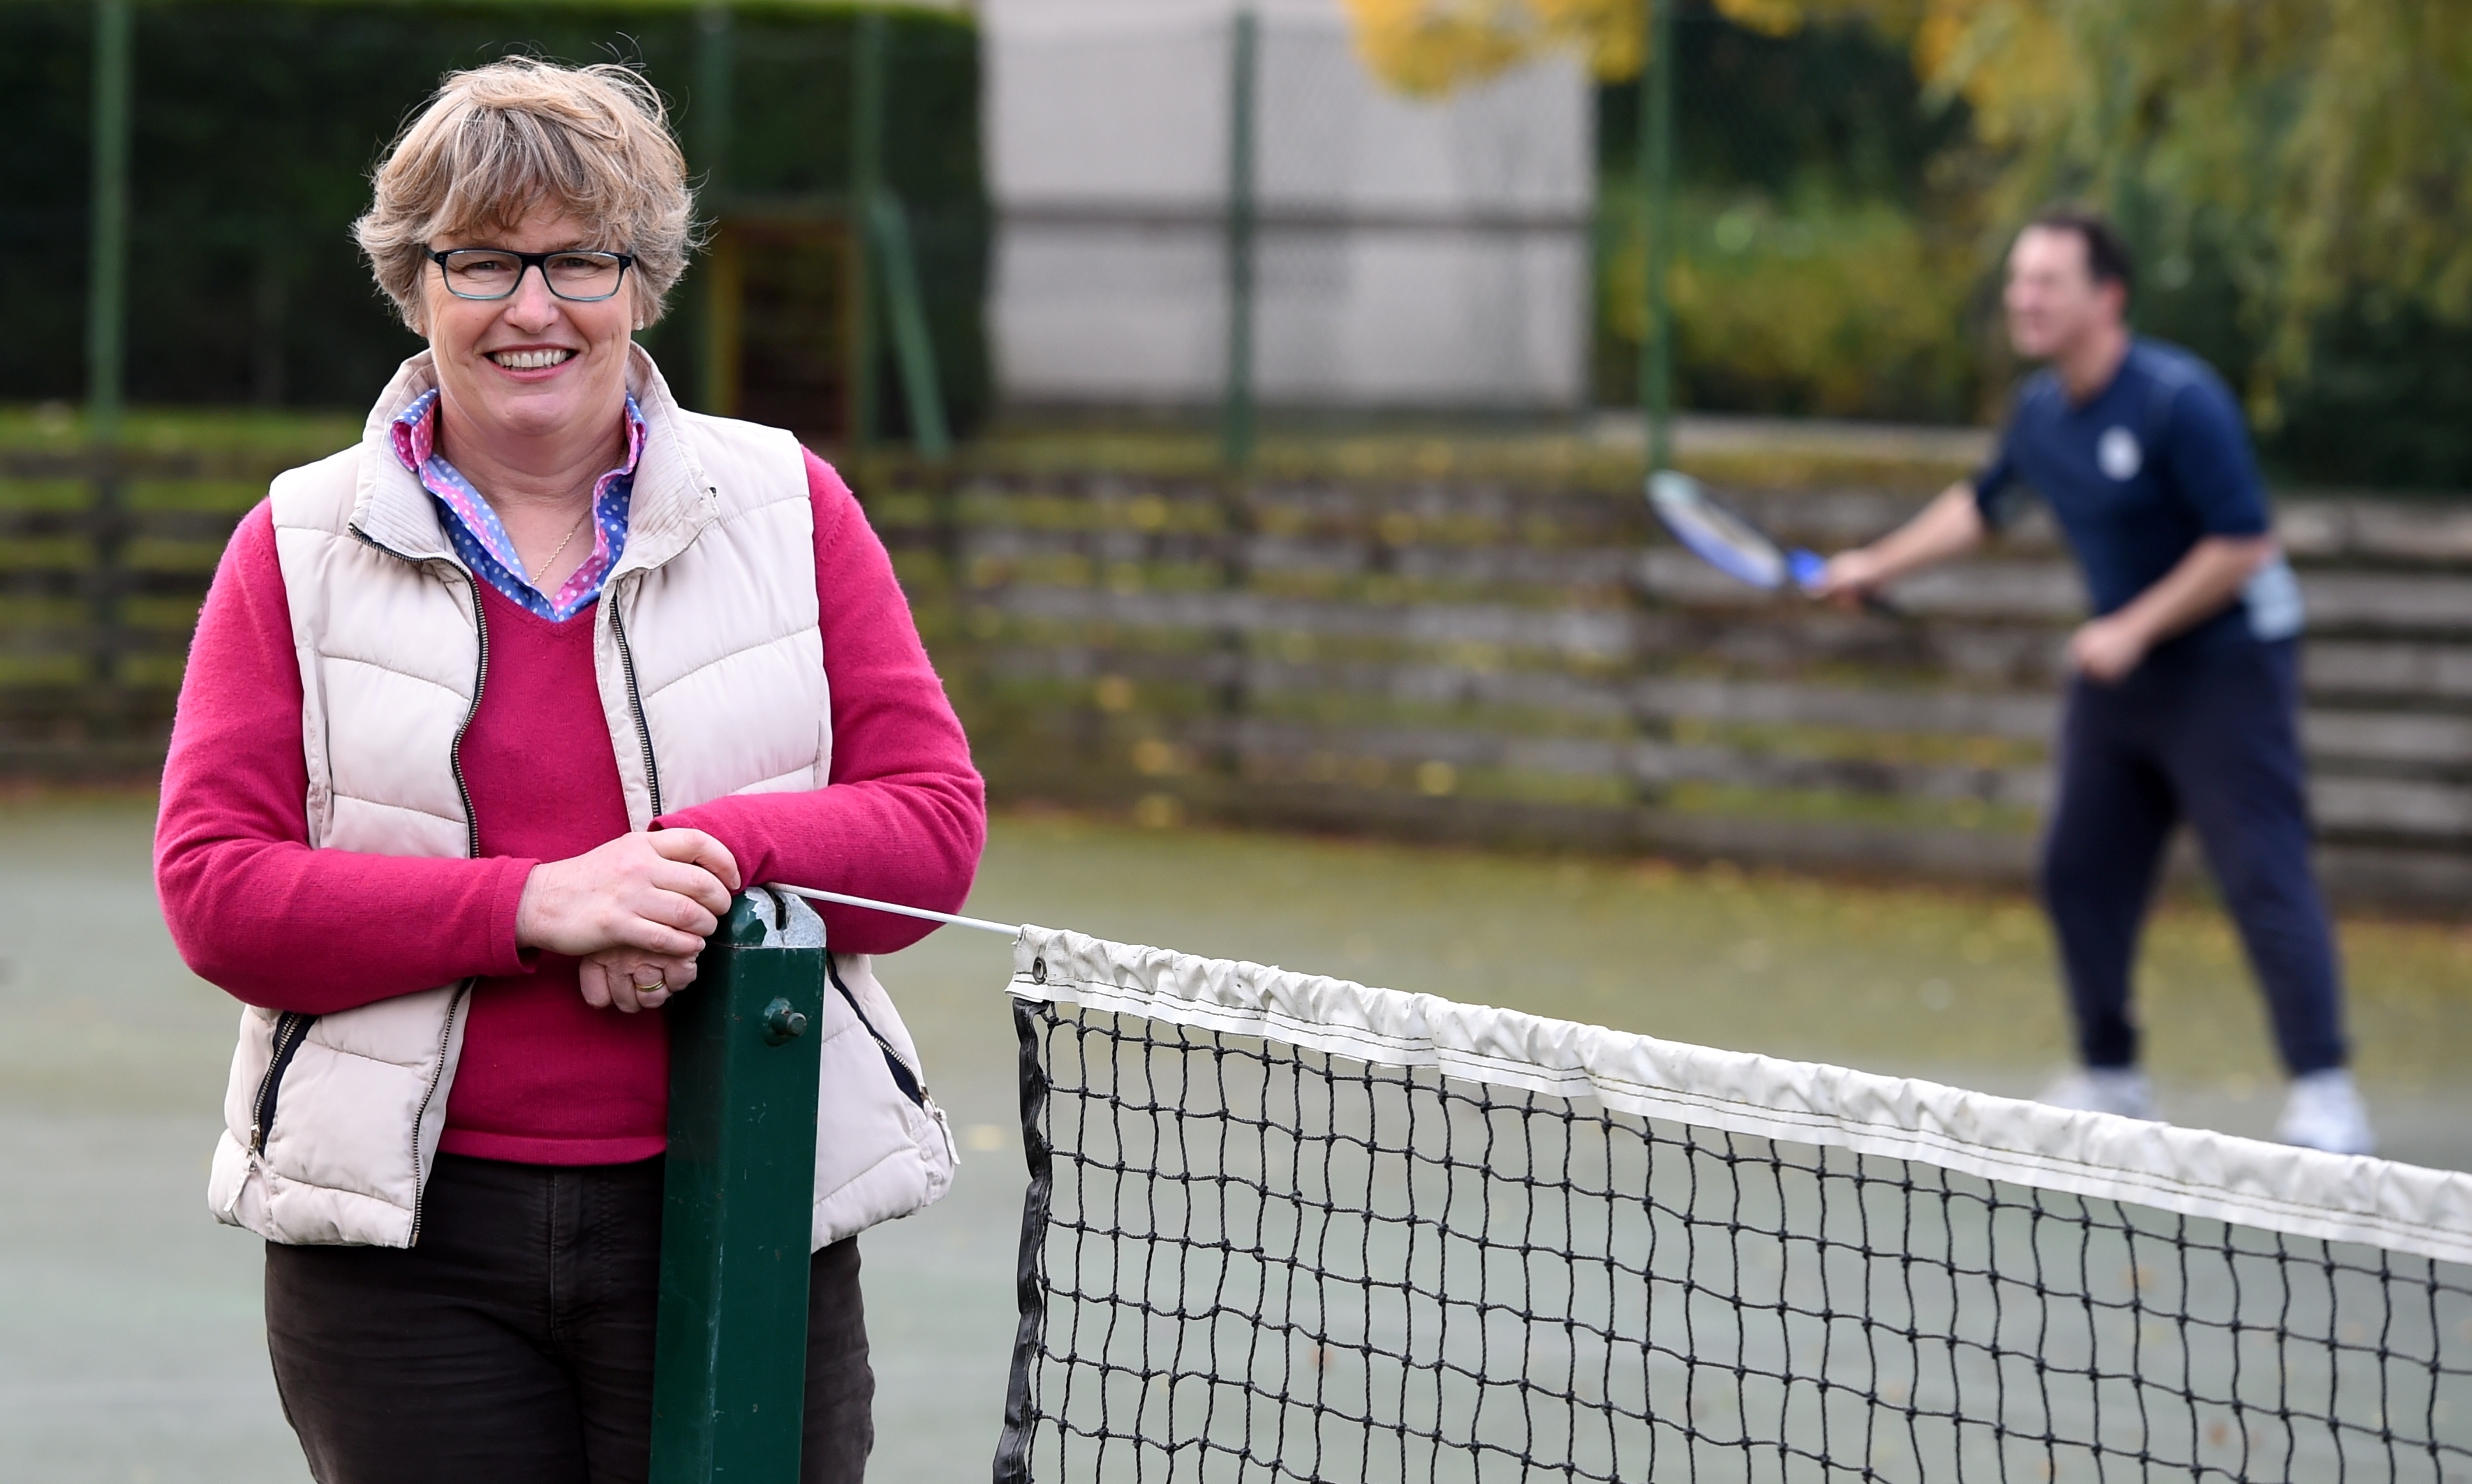 Elgin lawn tennis club, committee member Teresa Tait. 
Picture by Jim Irvine